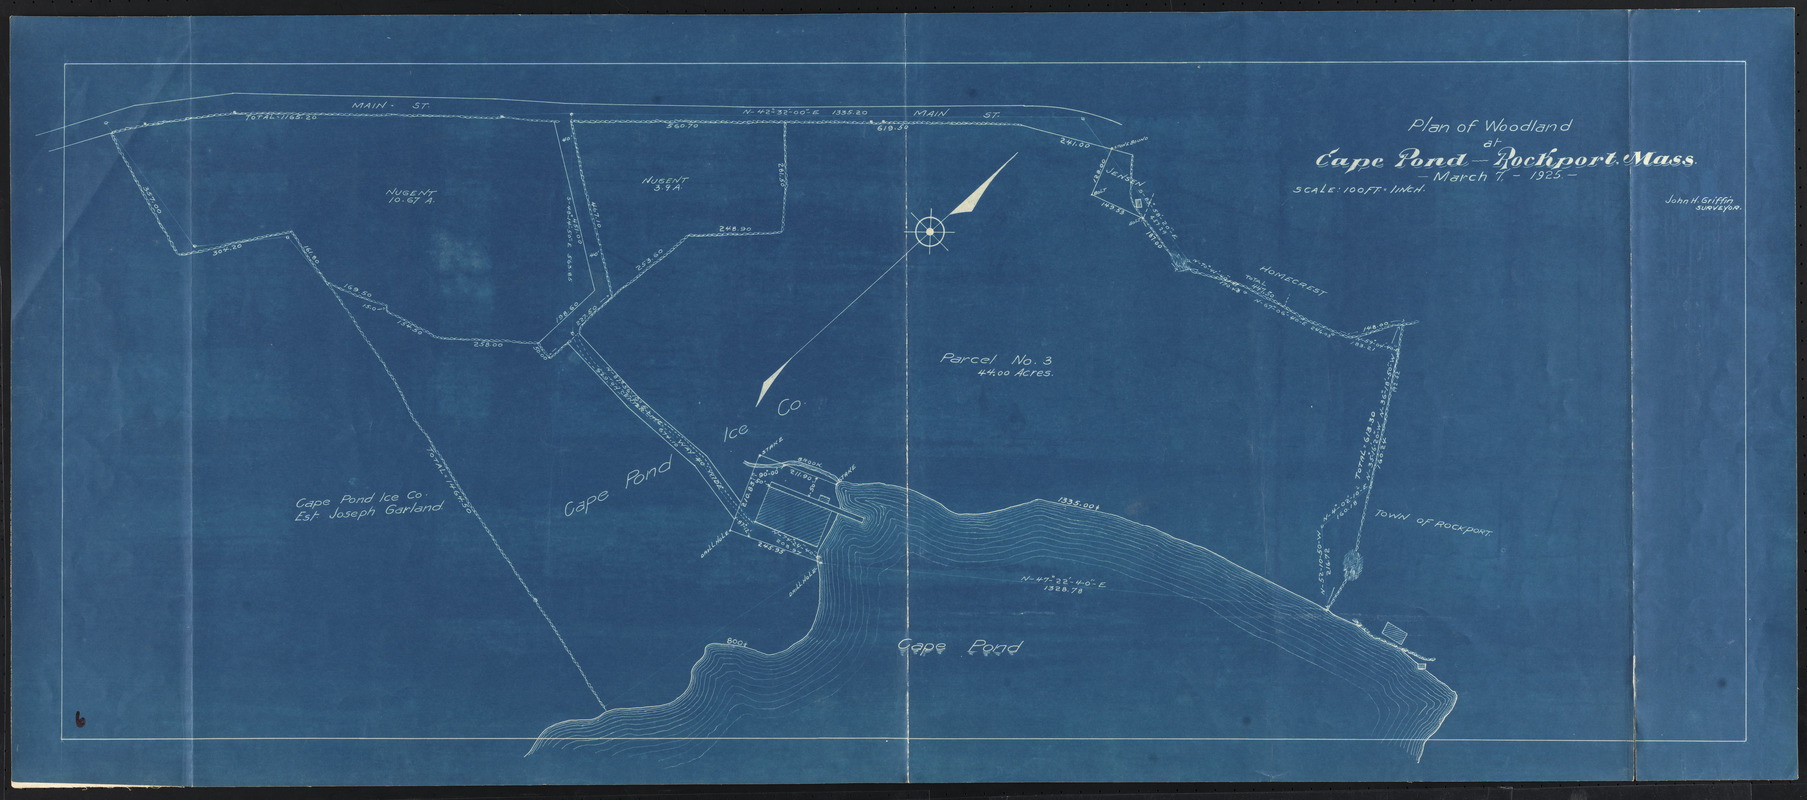 Plan of woodland at Cape Pond, Rockport, Mass.